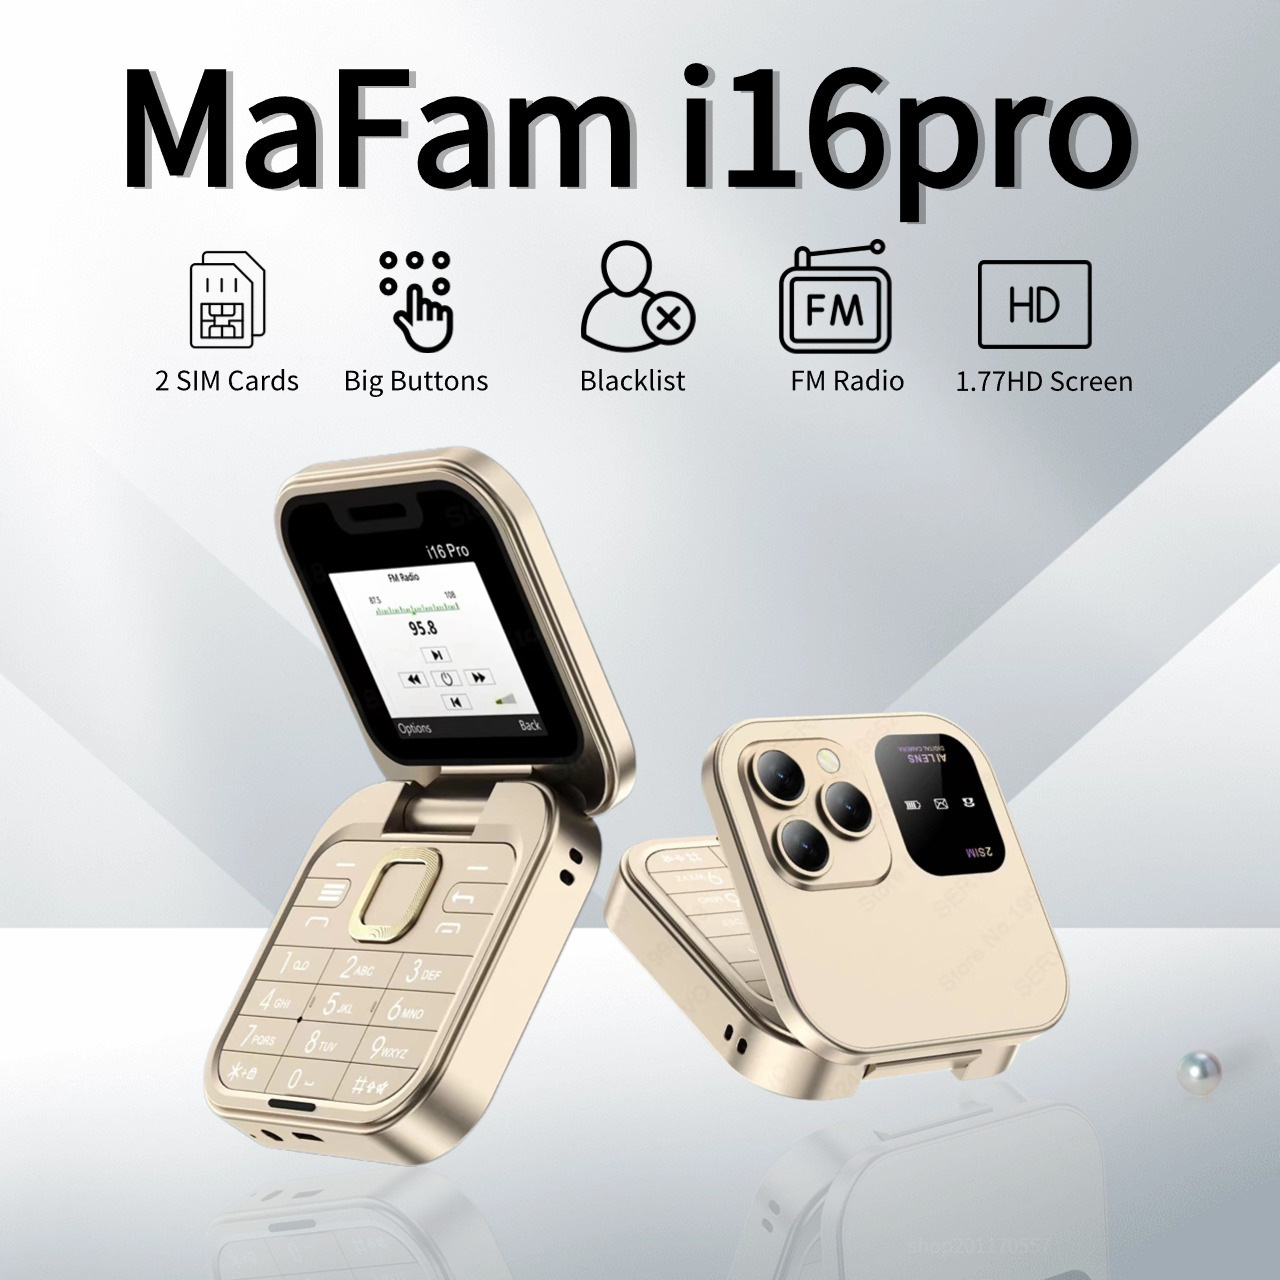 Mobile I16 Pro Mini Folding Phone 2G GSM Dual SIM Card Quick Dial Children's Phone Video Player 3.5mm FM Mini Flip Elderly Phone Support Multiple Countries Languages